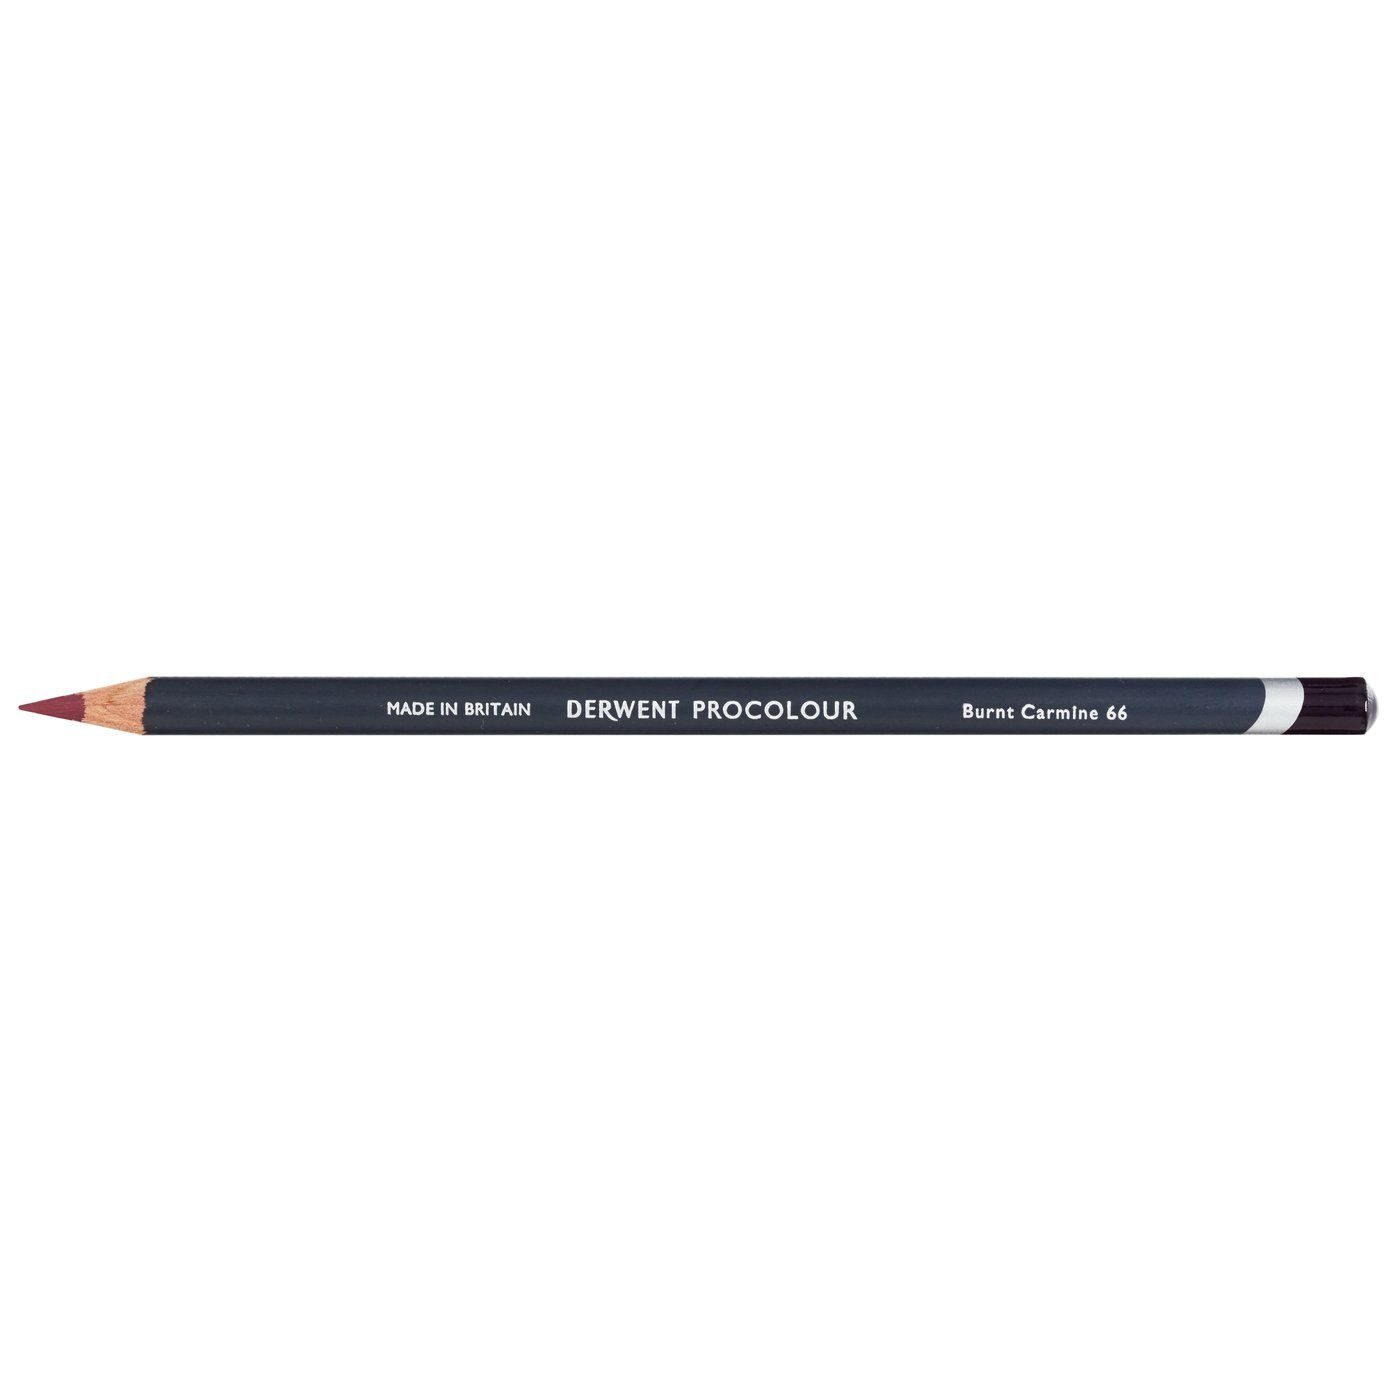 Derwent Procolour Pencil - 66 Burnt Carmine